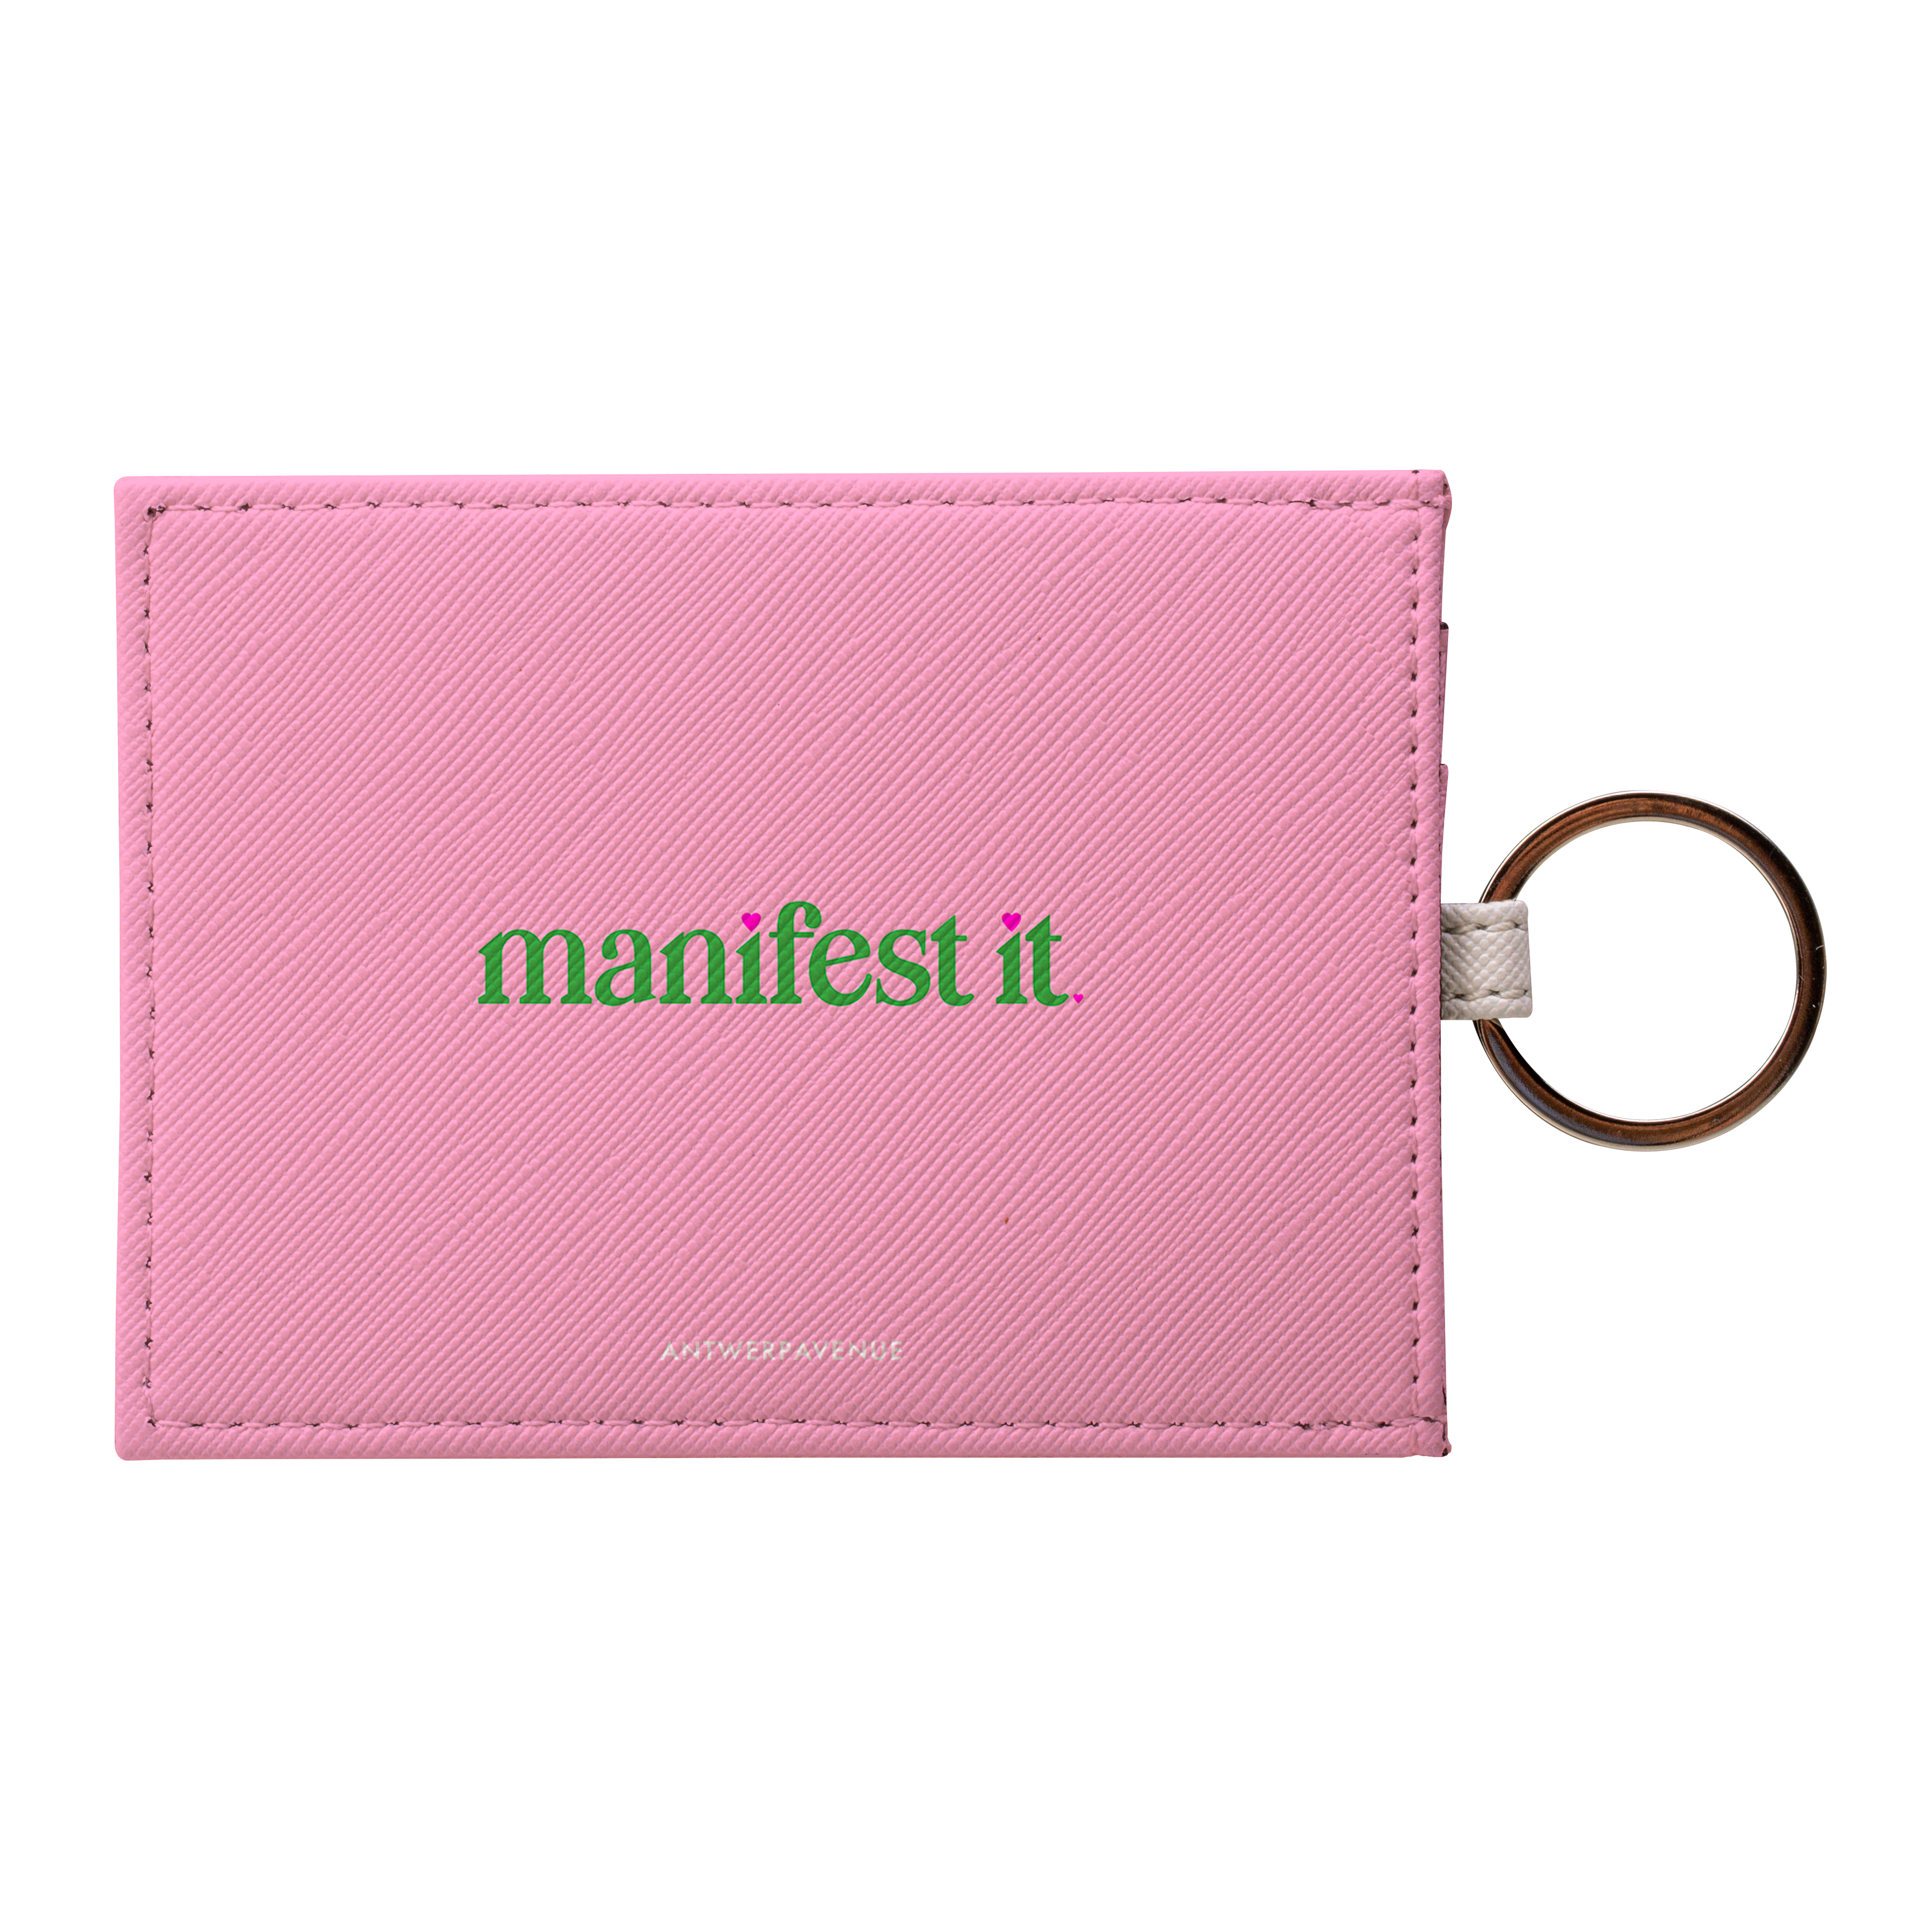 Manifest It - Card Holder